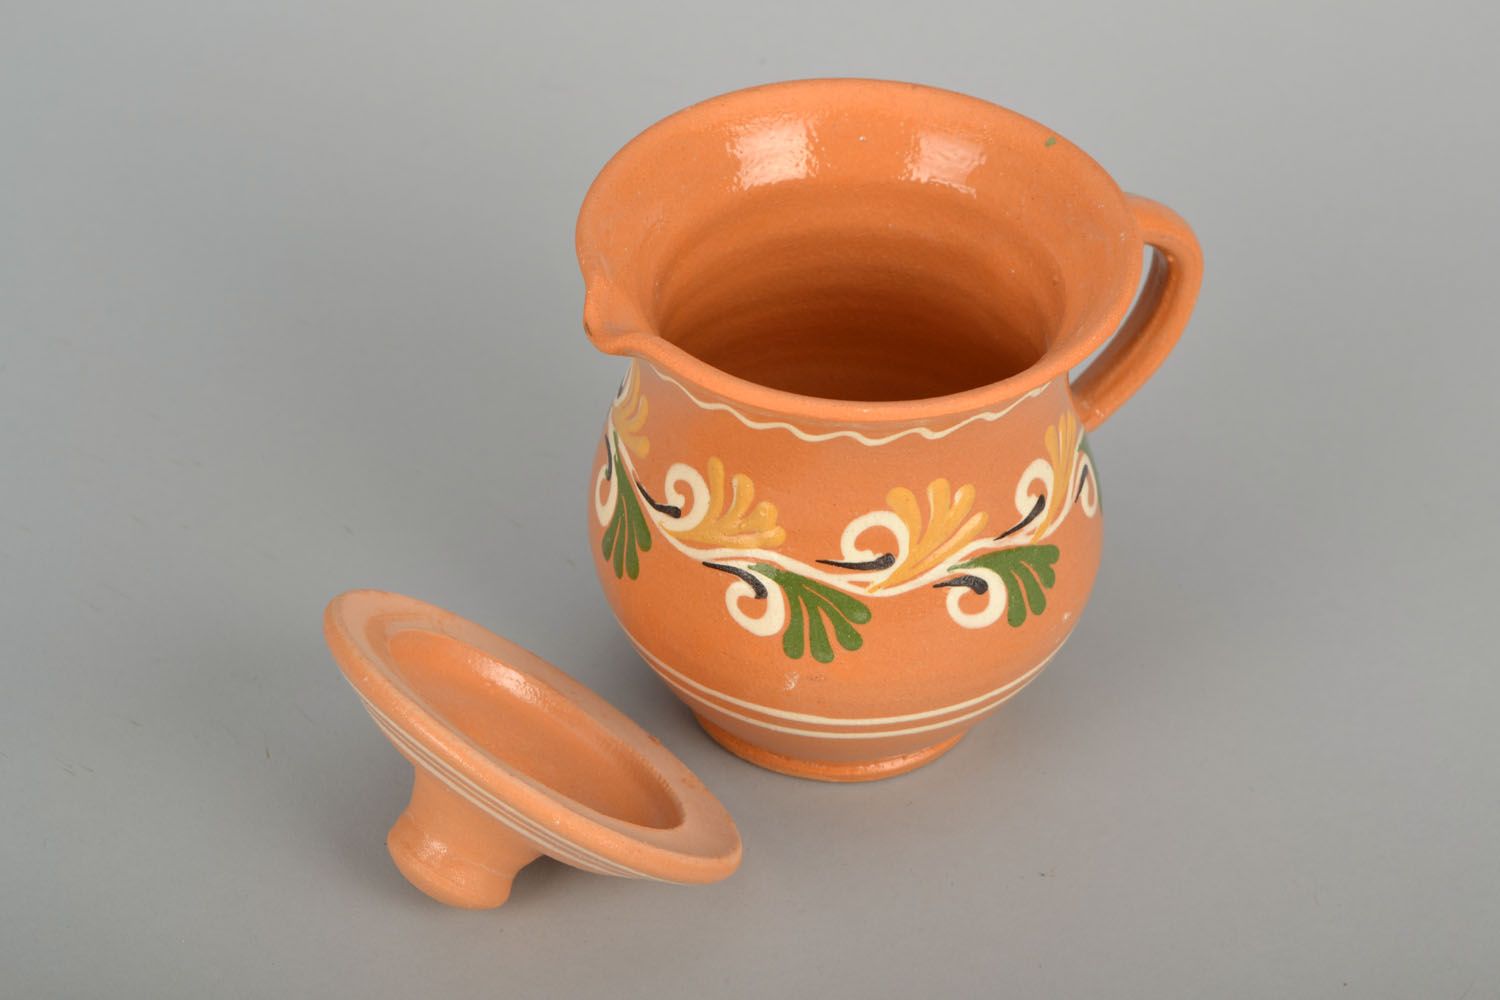 12 oz ceramic porcelain creamer pitcher with hand-painted floral design 1,23 lb photo 4